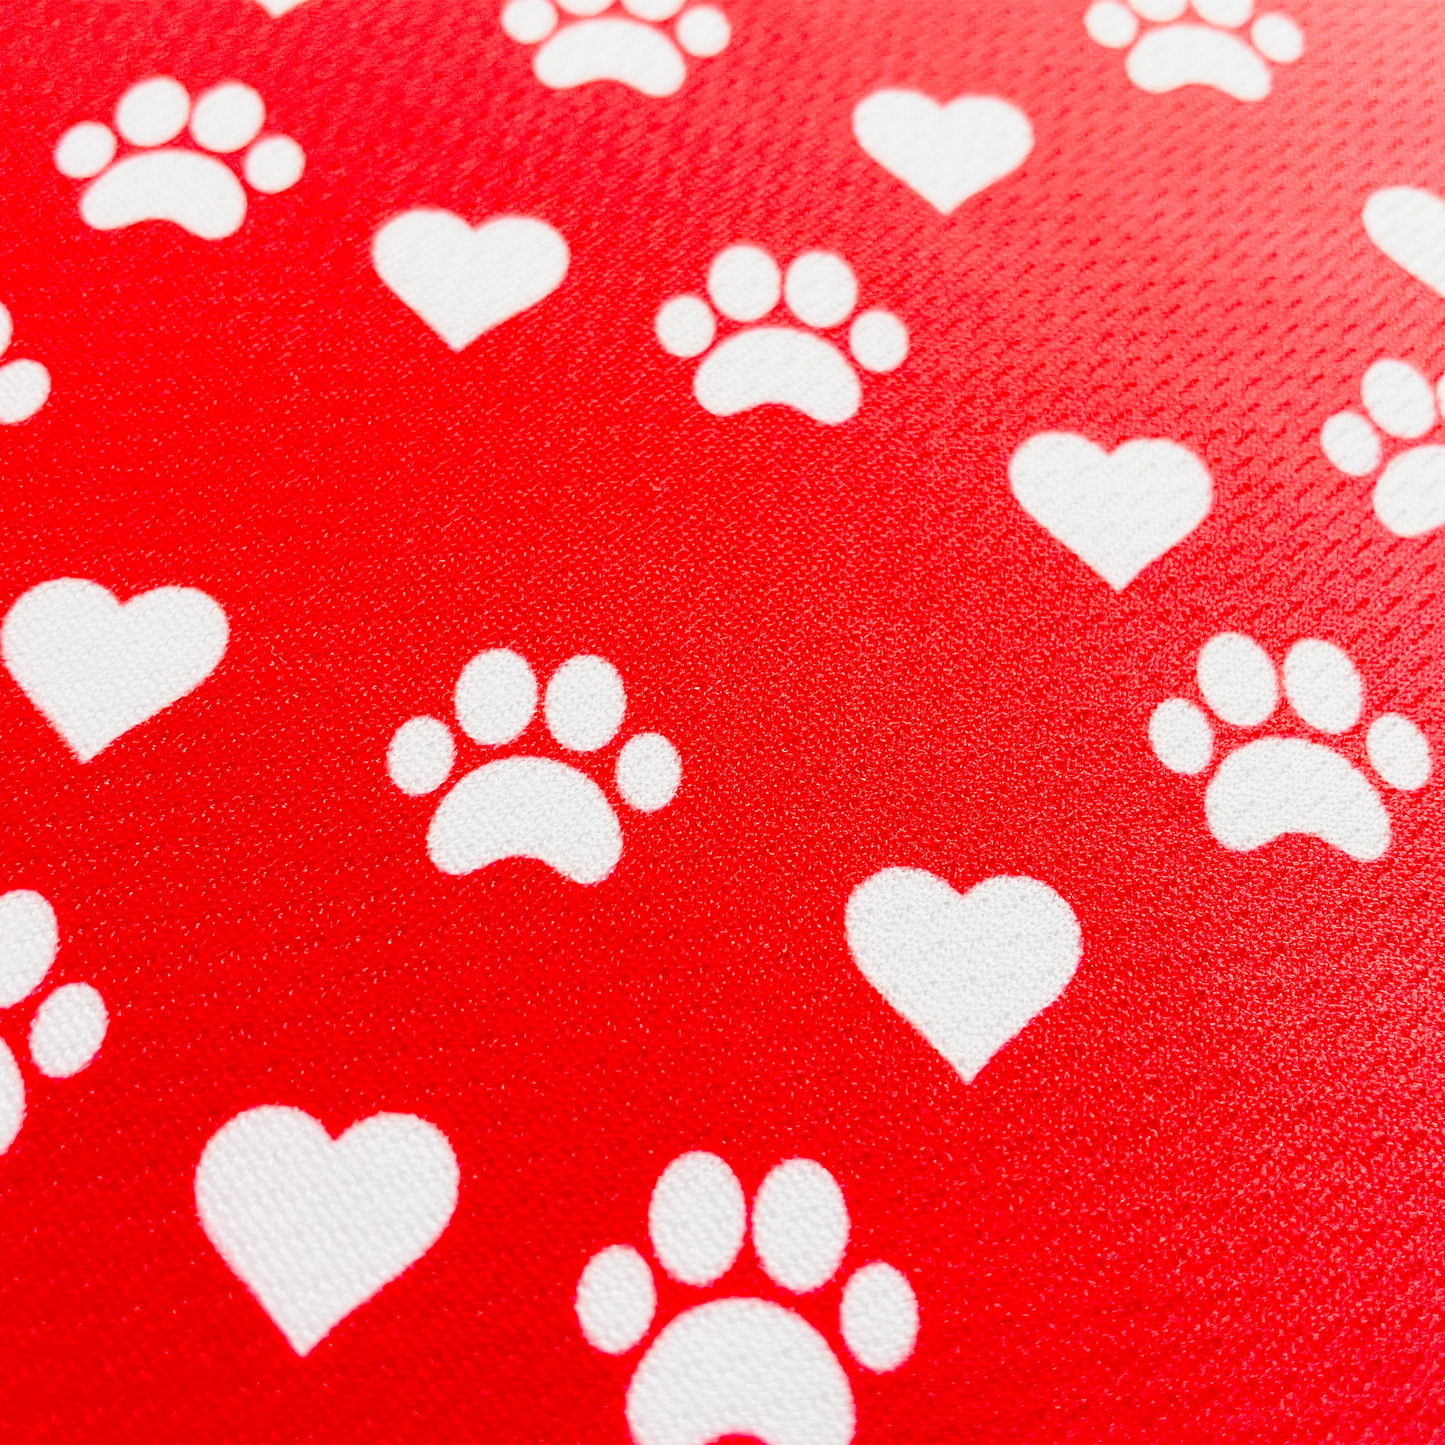 Valentines Day Paw Prints & Hearts Red Tie On Dog Bandana